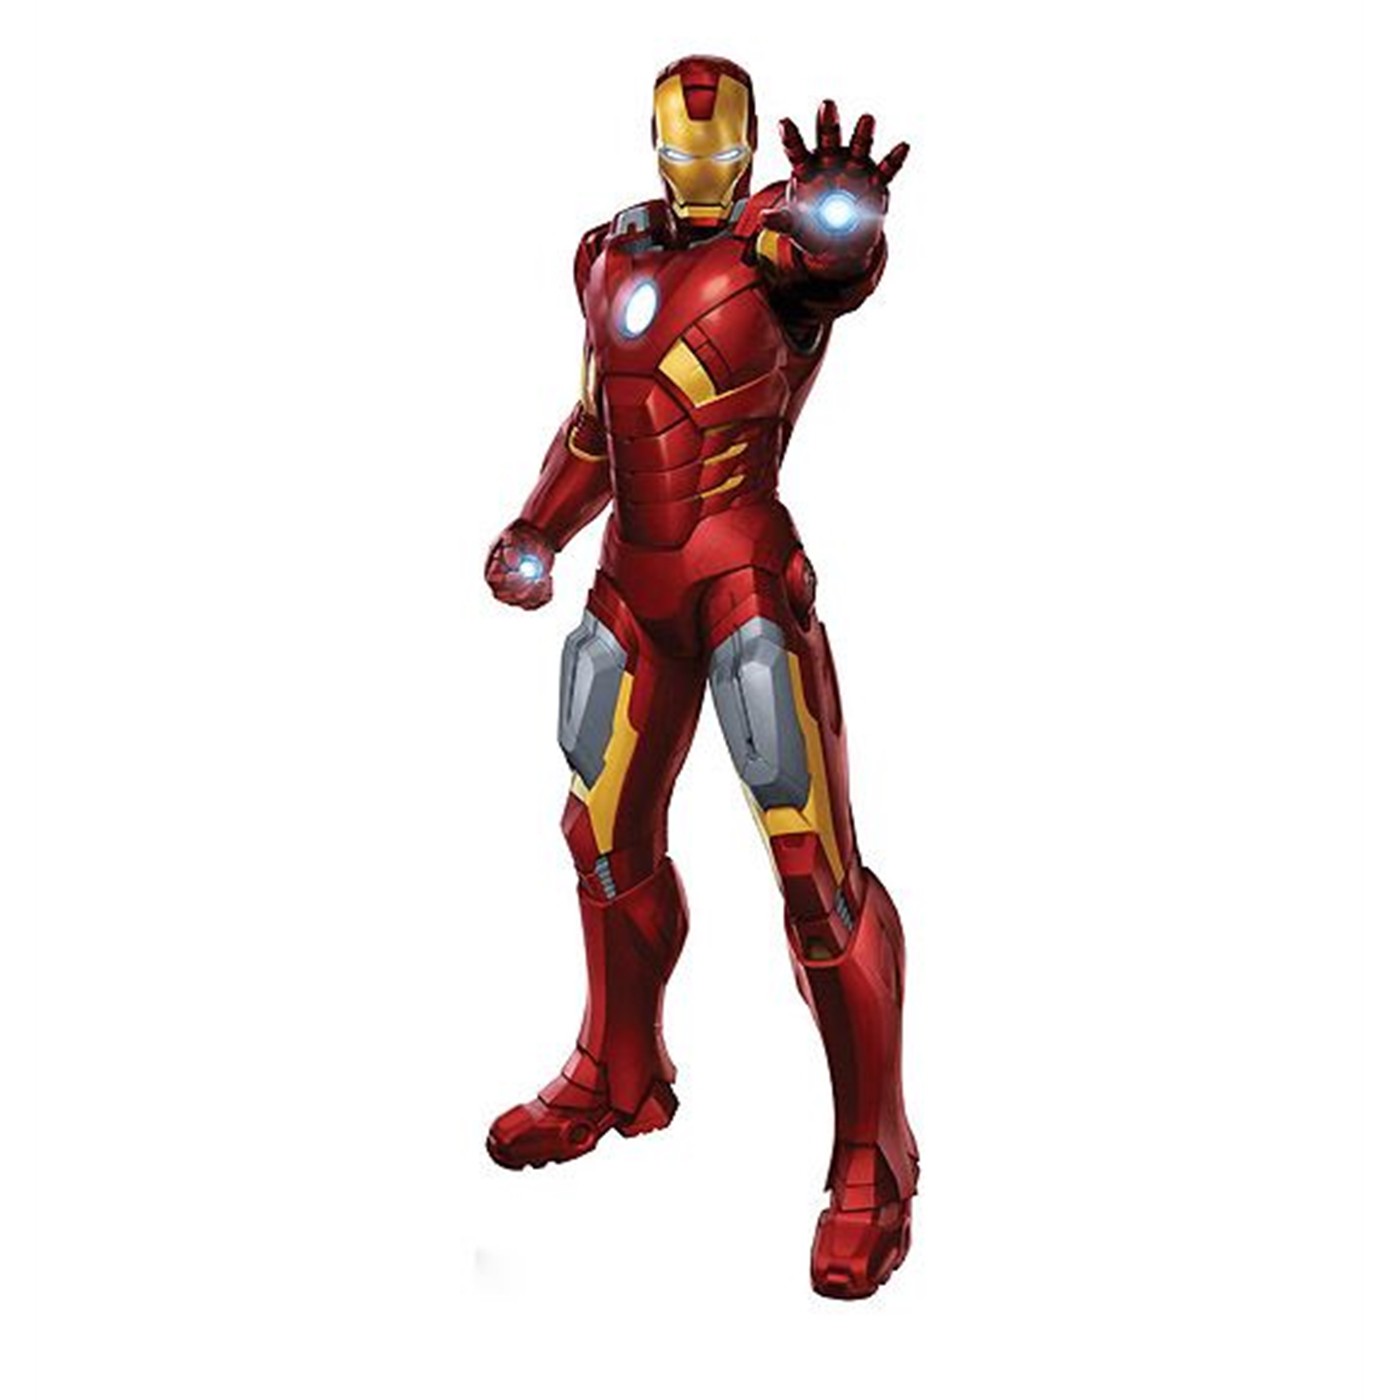 The Avengers Movie Iron Man Cardboard Standup